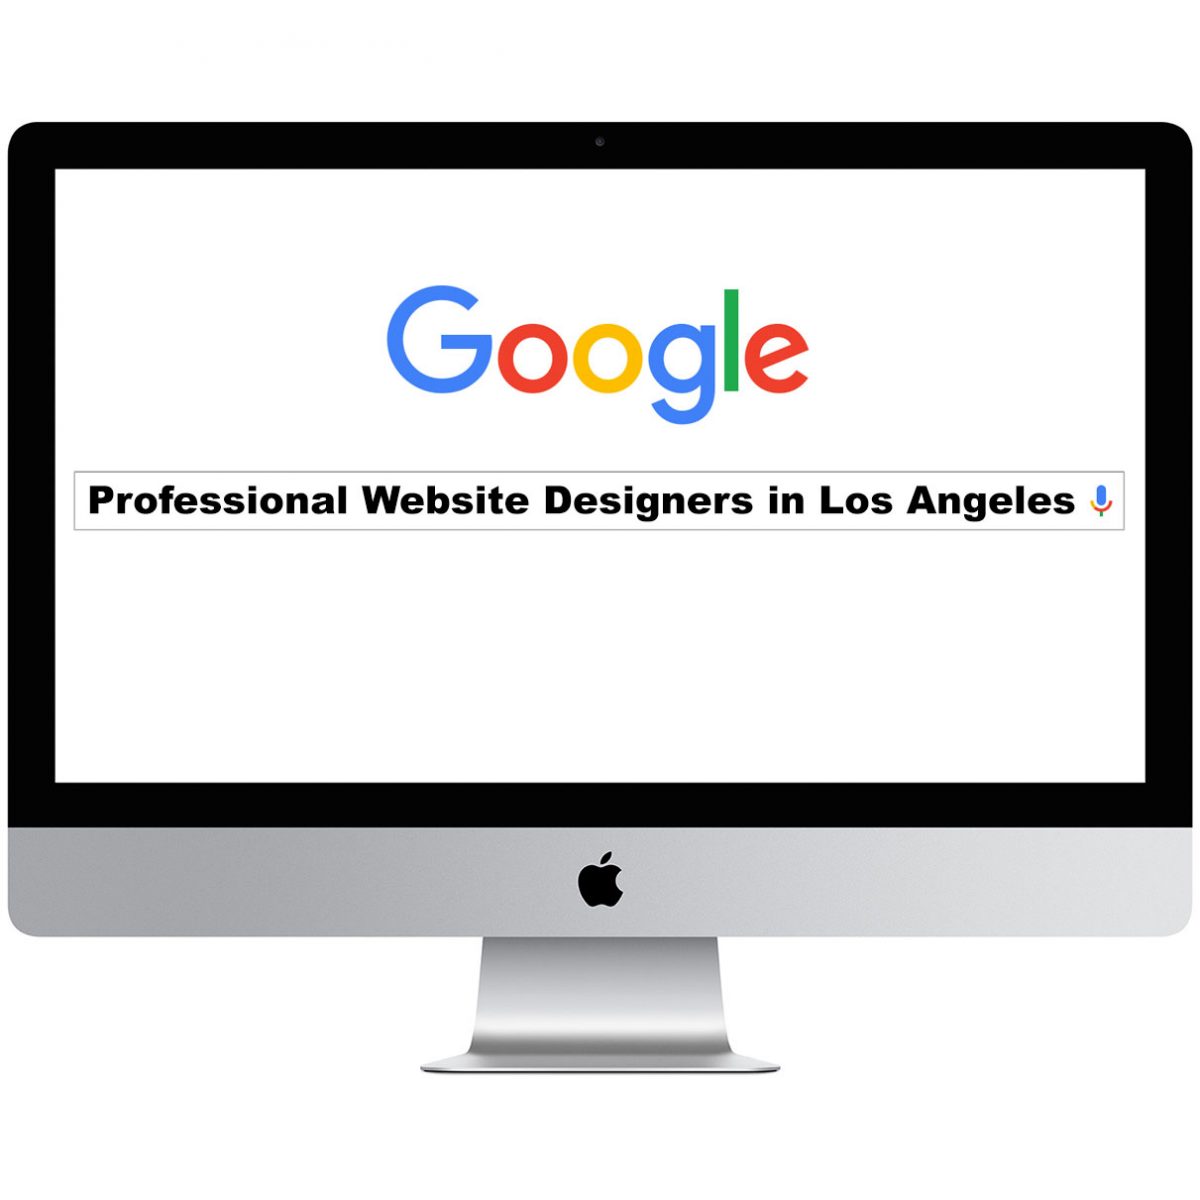 Professional Website Designers in Los Angeles